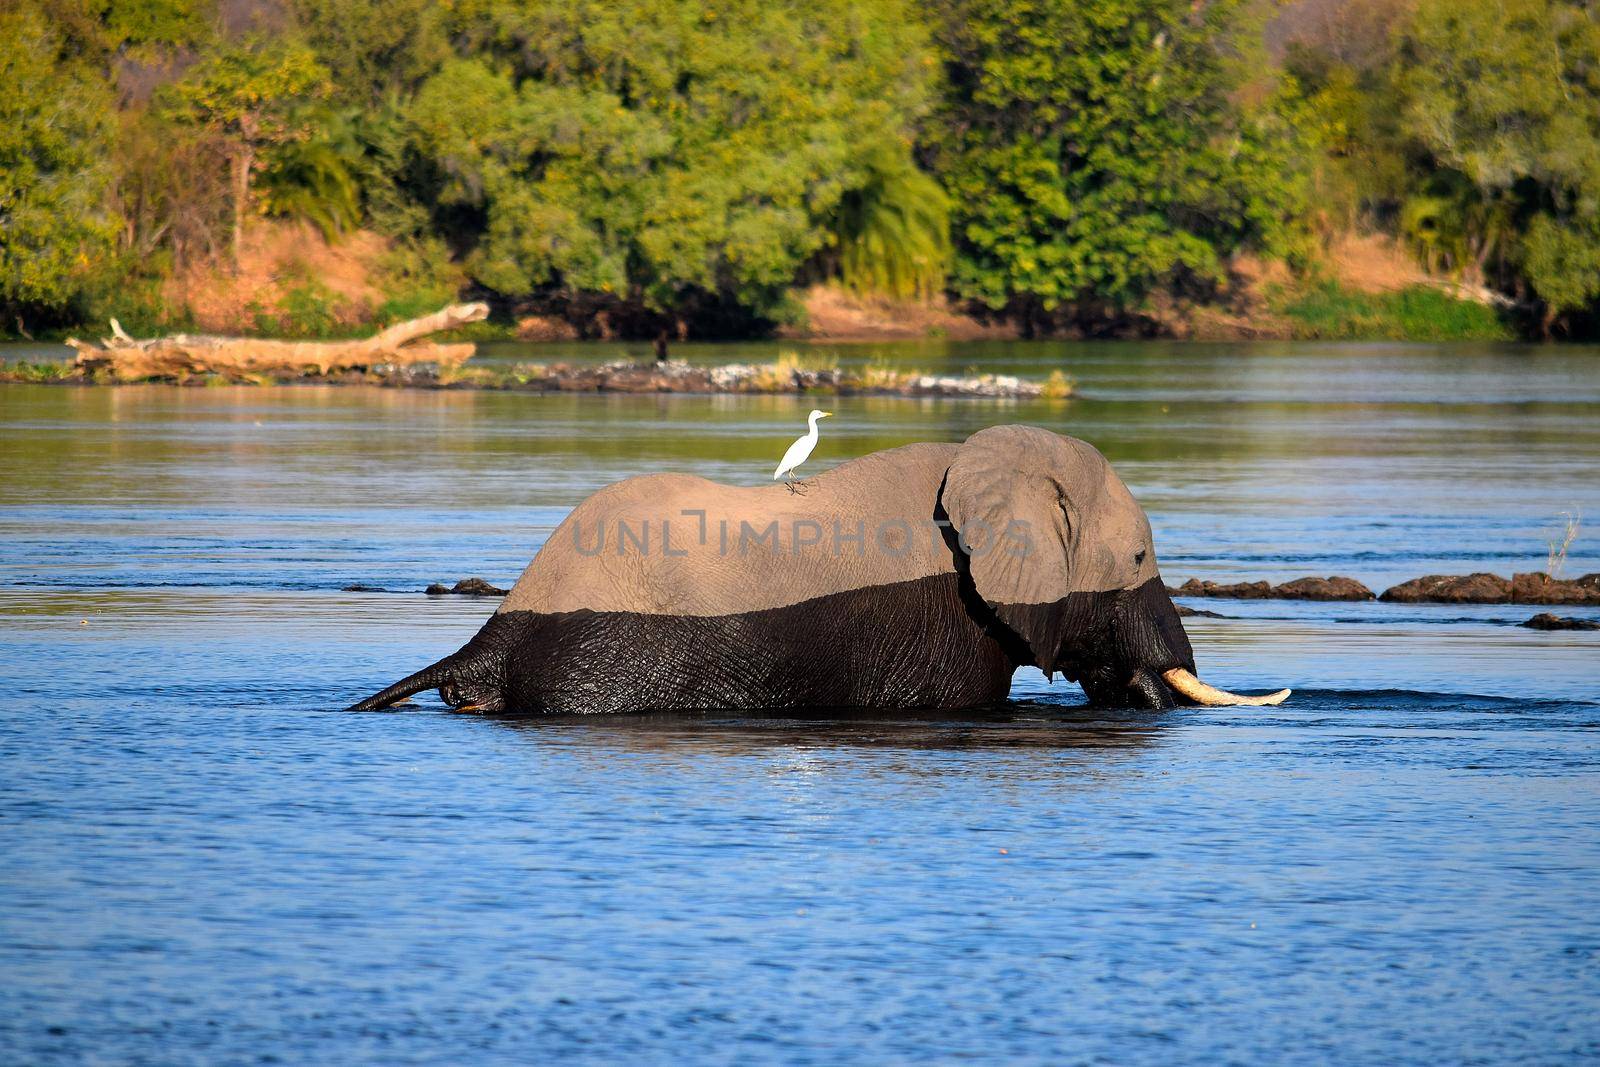 Elephant crosses the Zambezi river with a passenger.